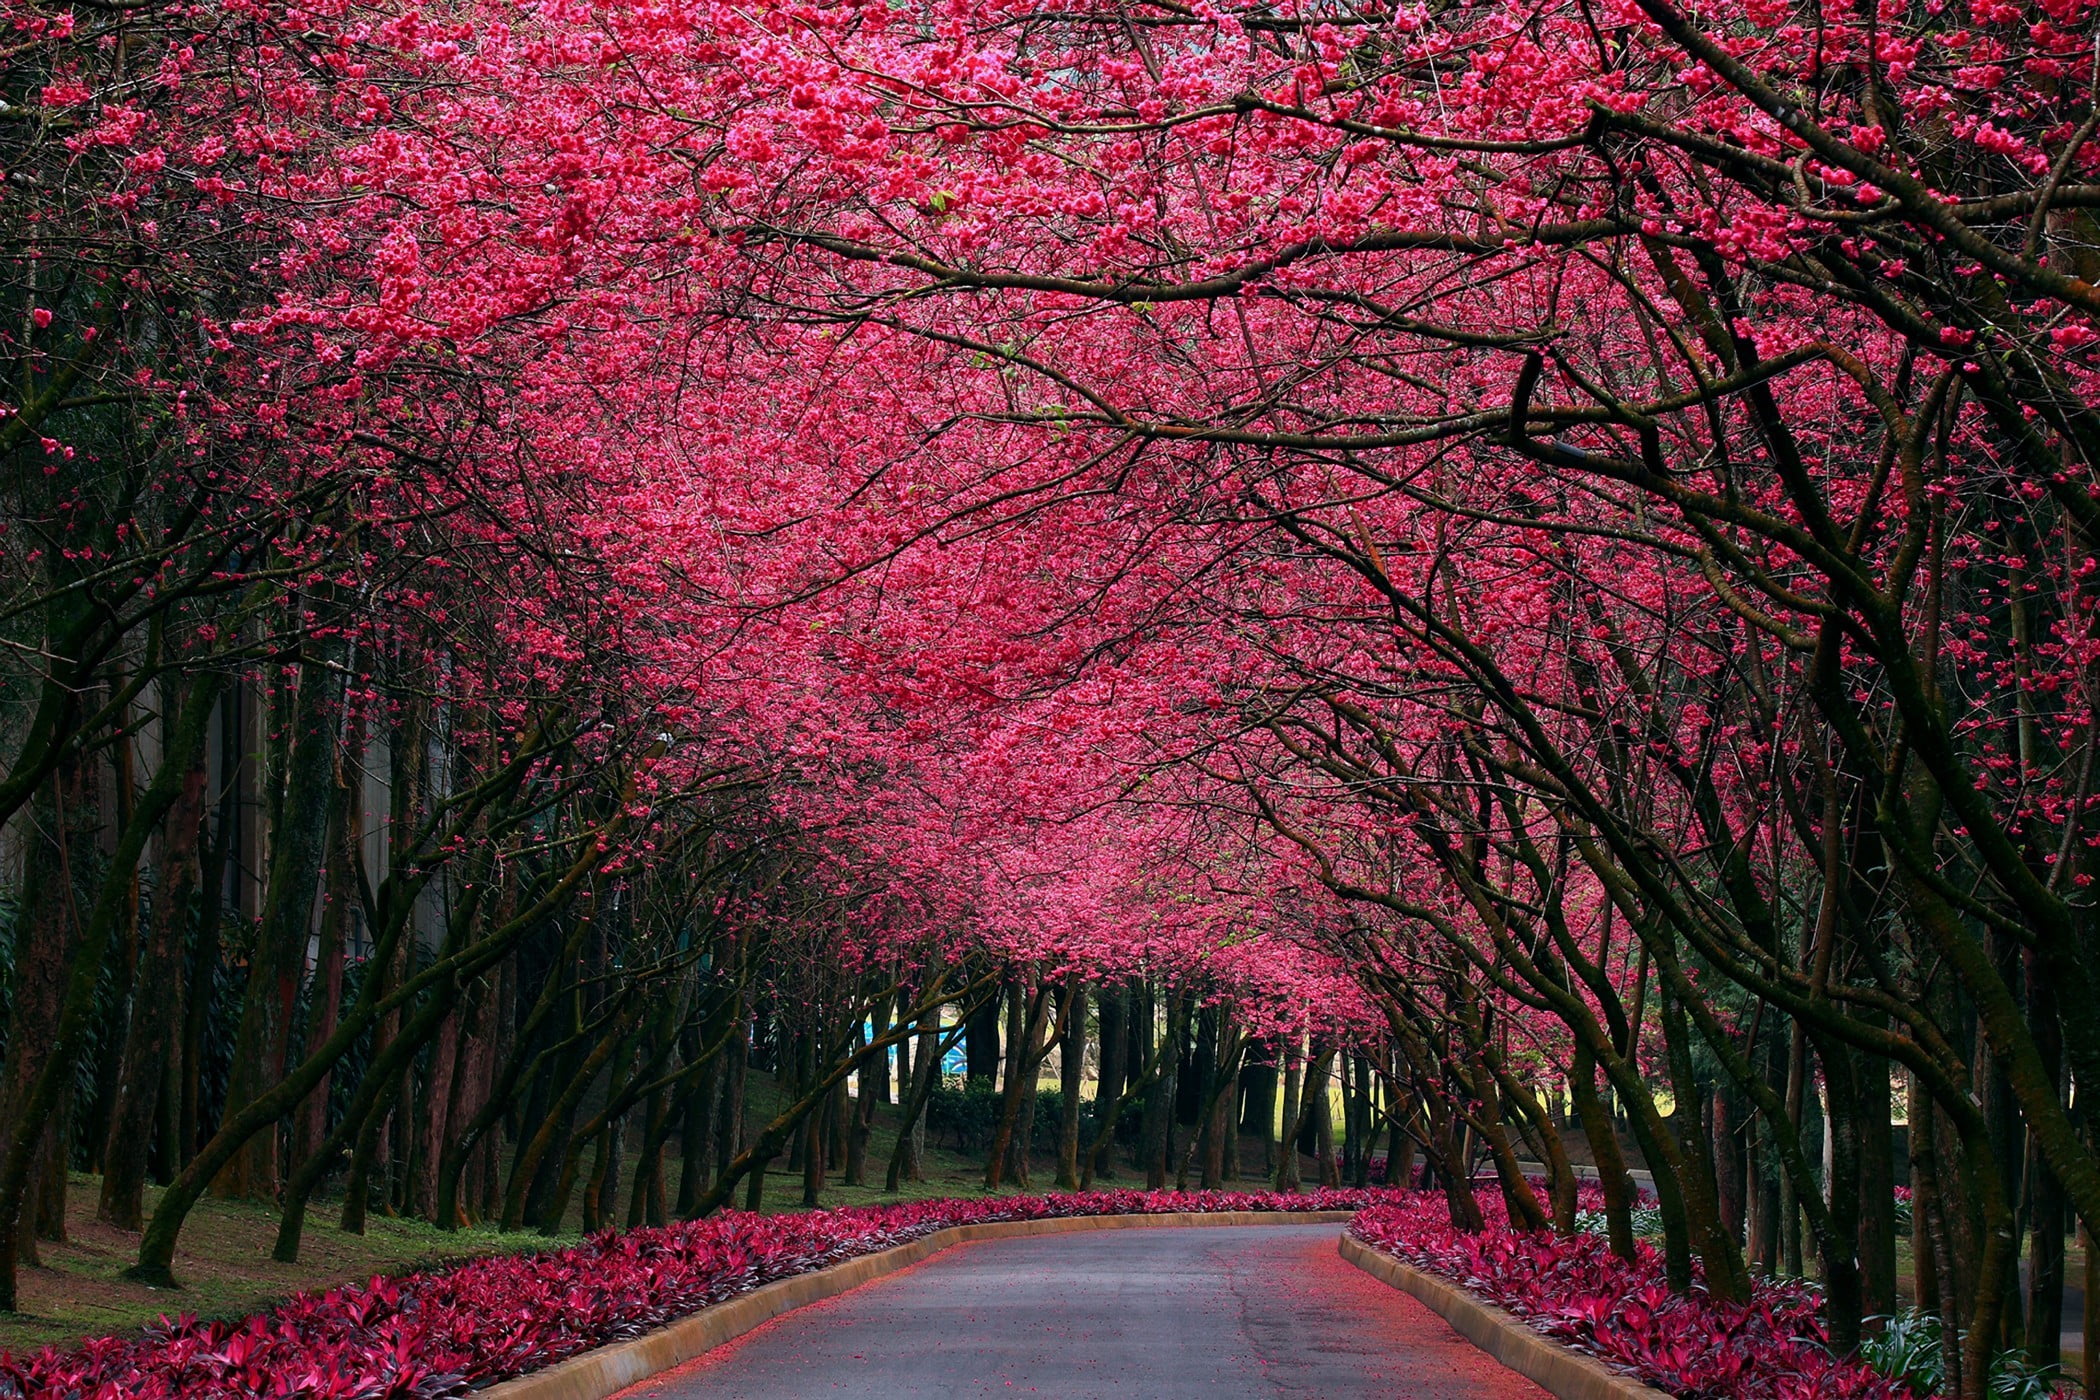 pink leaf trees, branch, road